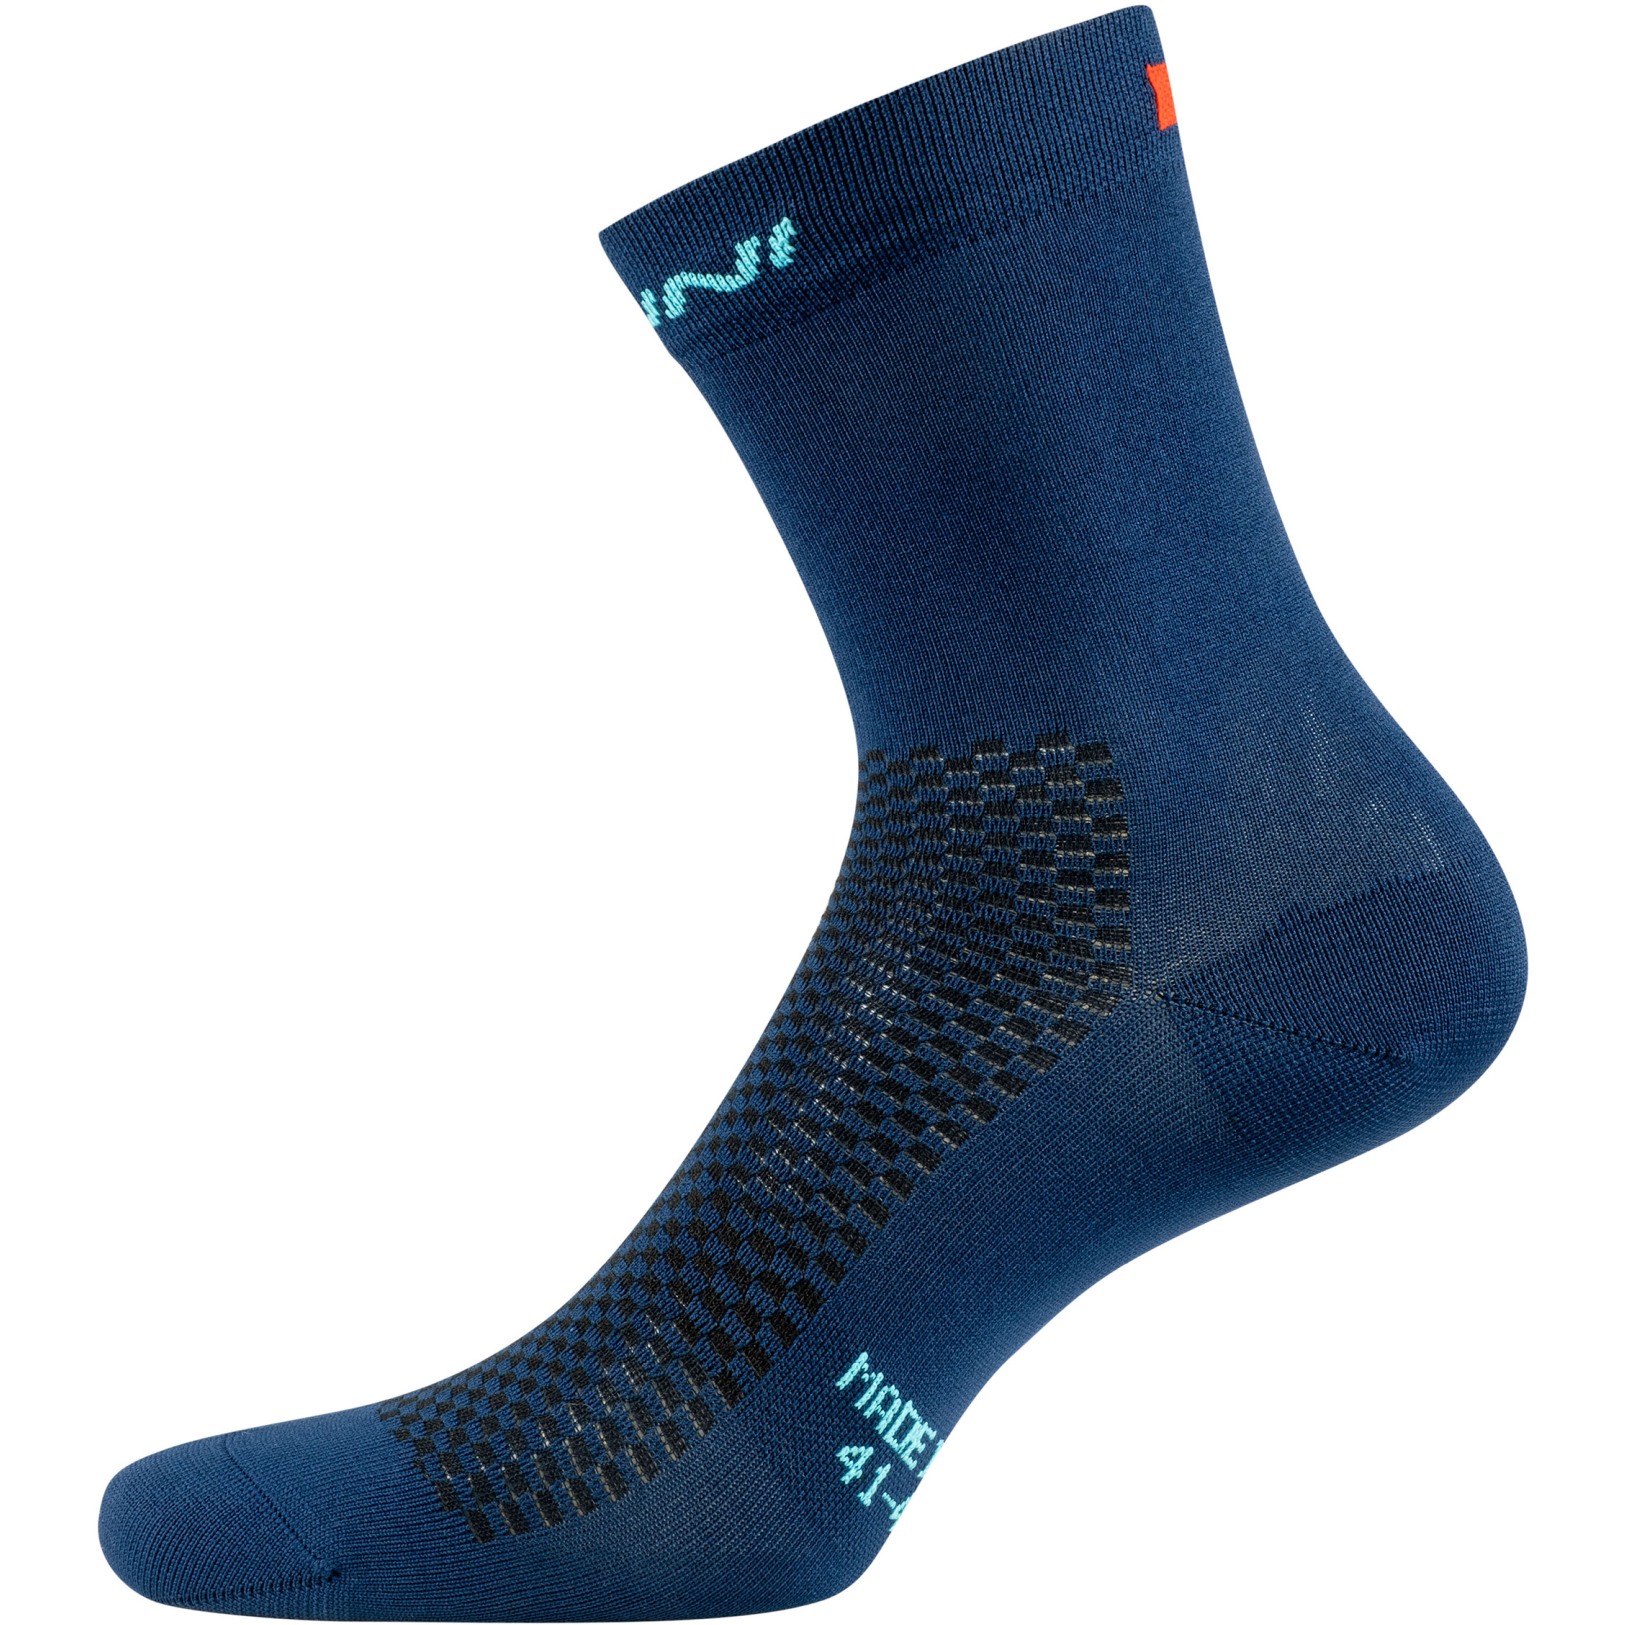 Productfoto van Nalini B0W Vela Socks - blue 4200